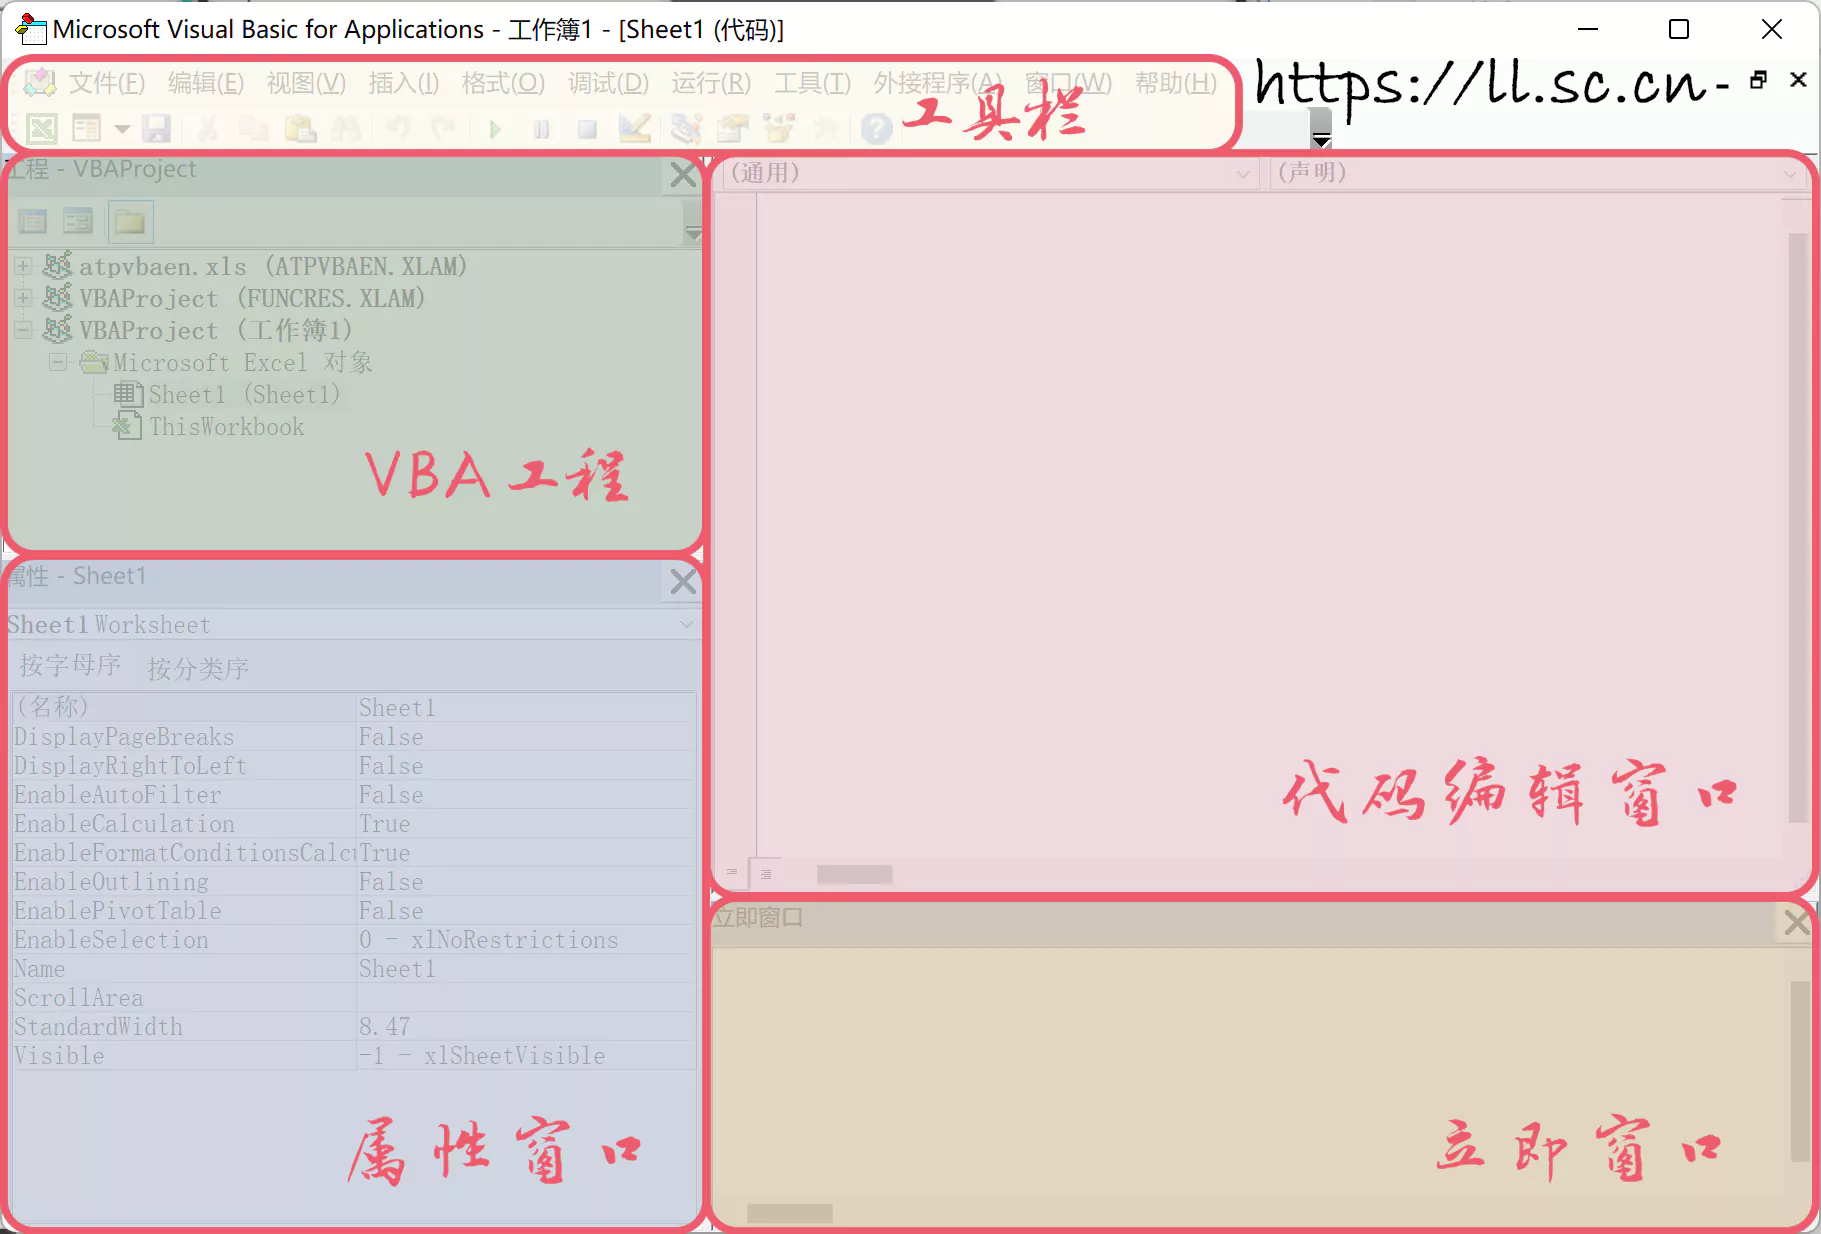 VBA 编辑器的界面